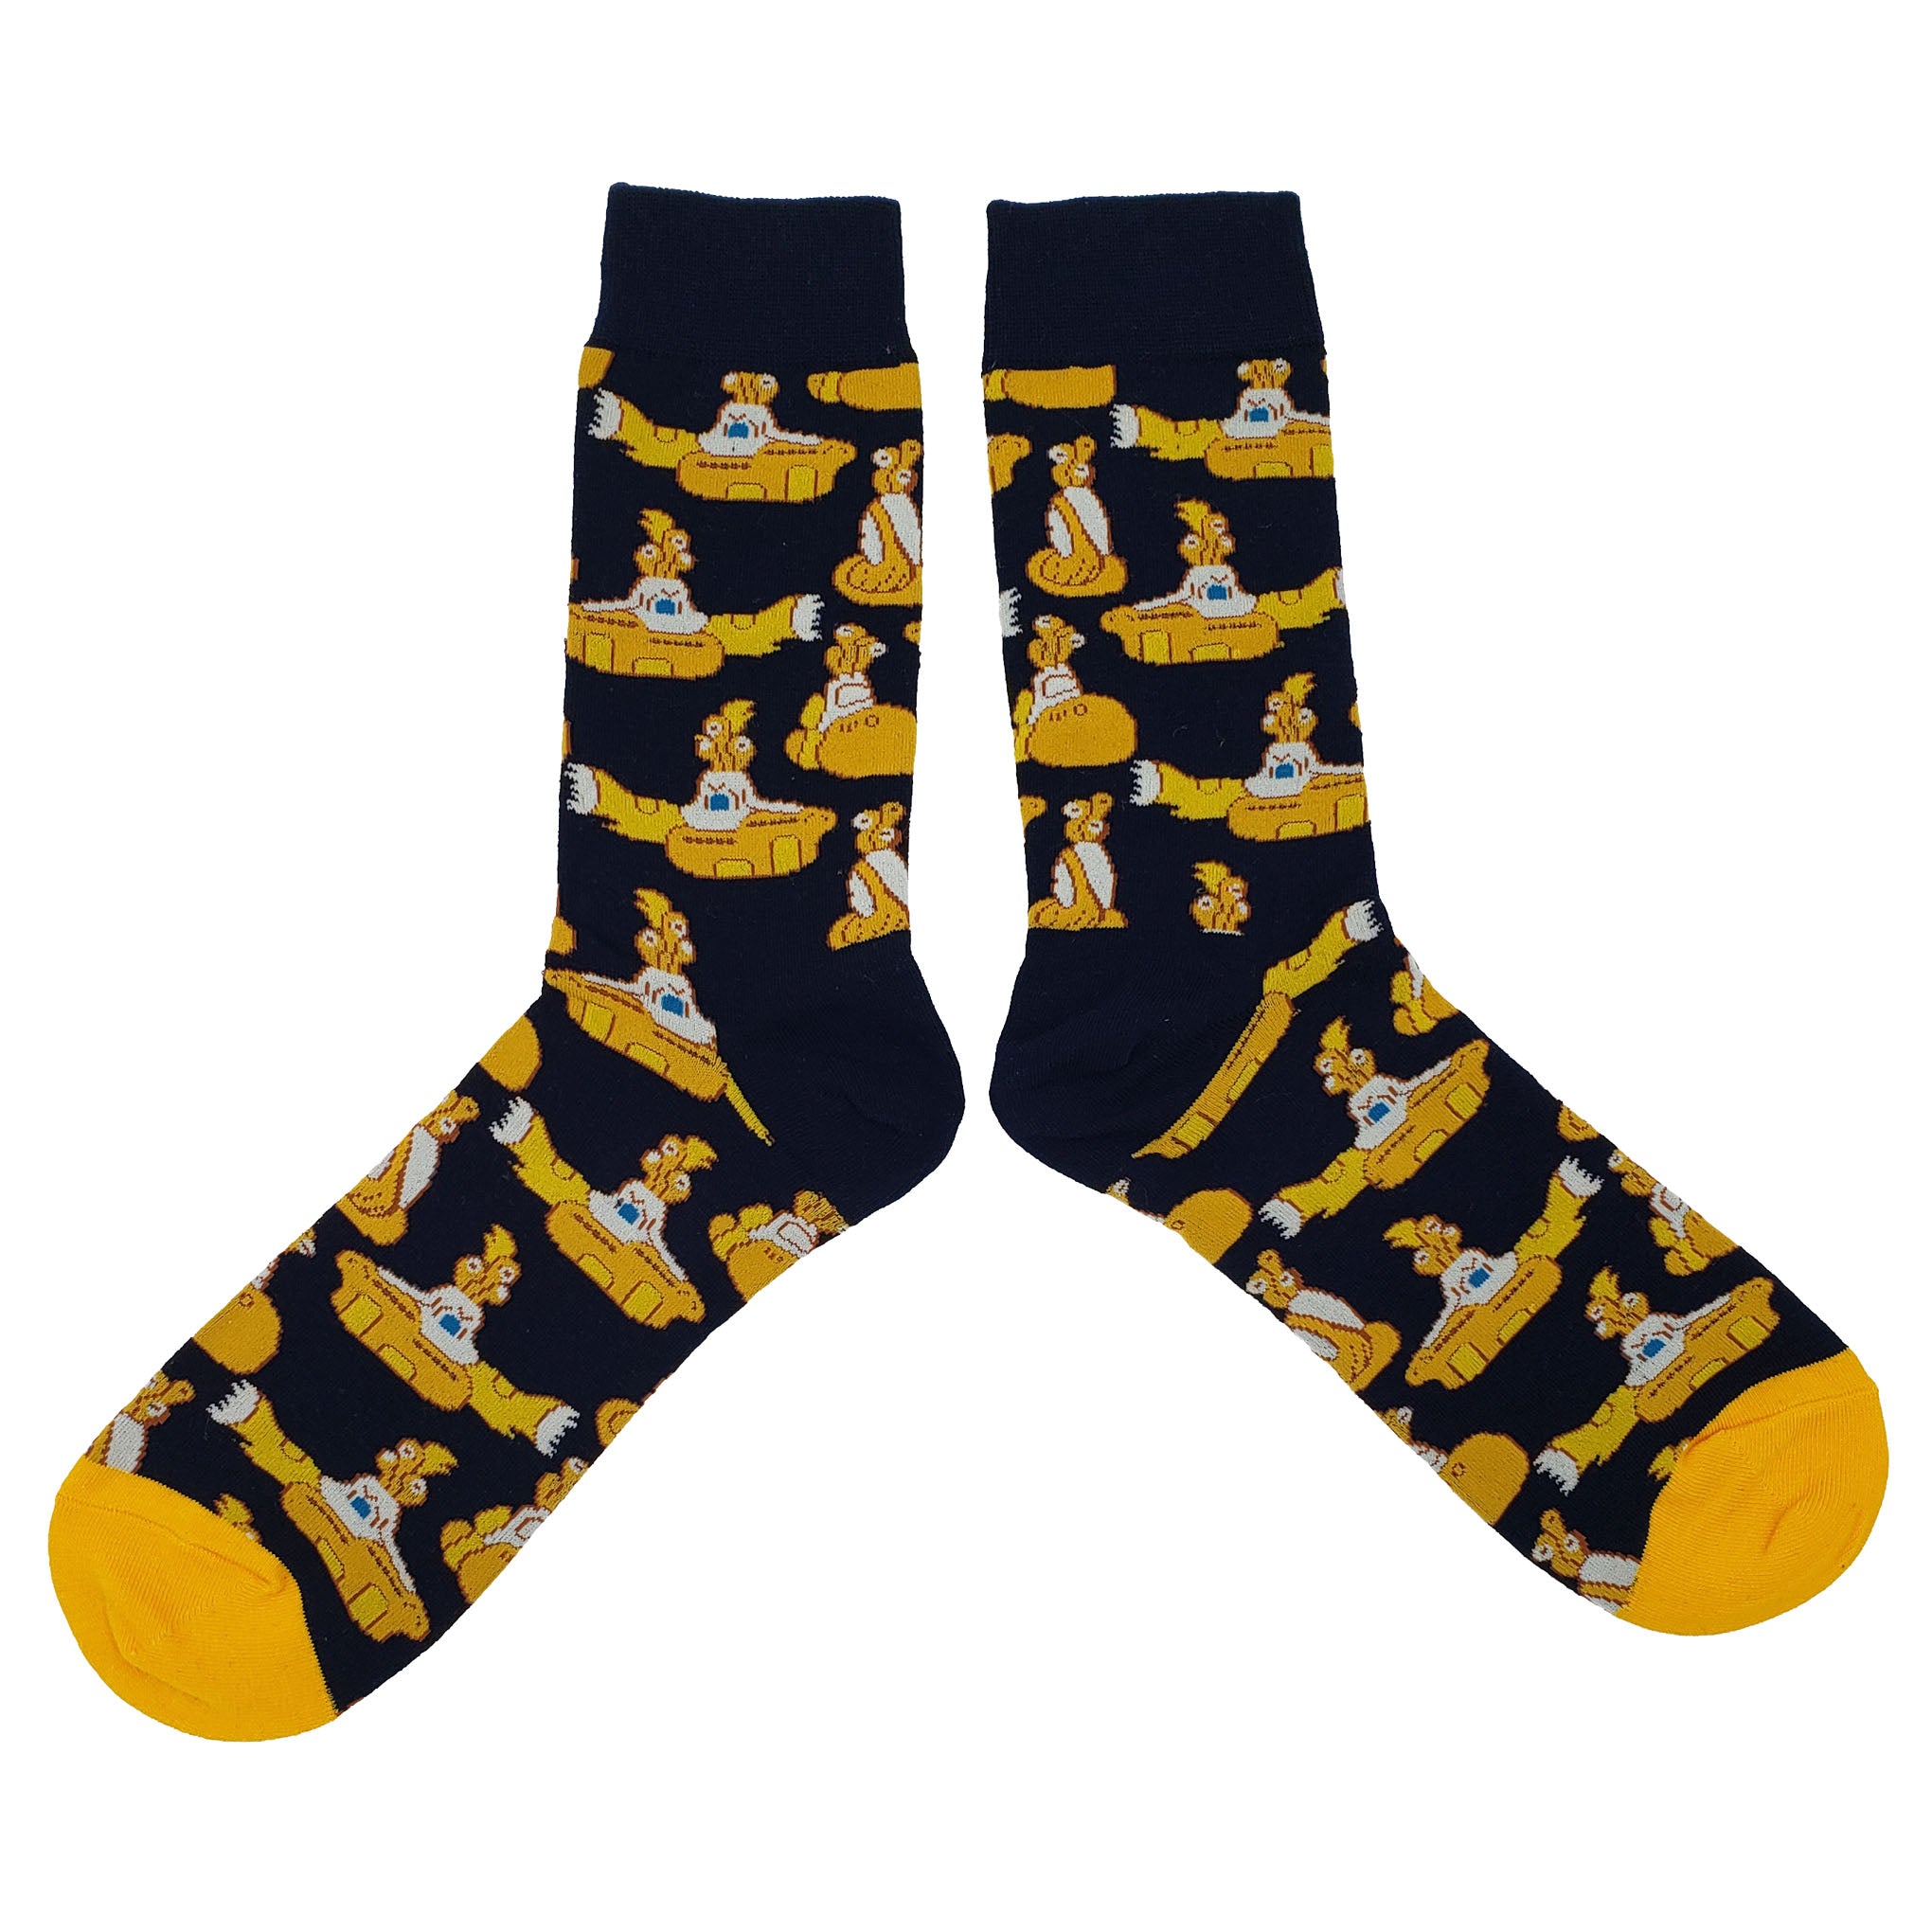 Yellow Submarine Socks - Fun and Crazy Socks at Sockfly.com